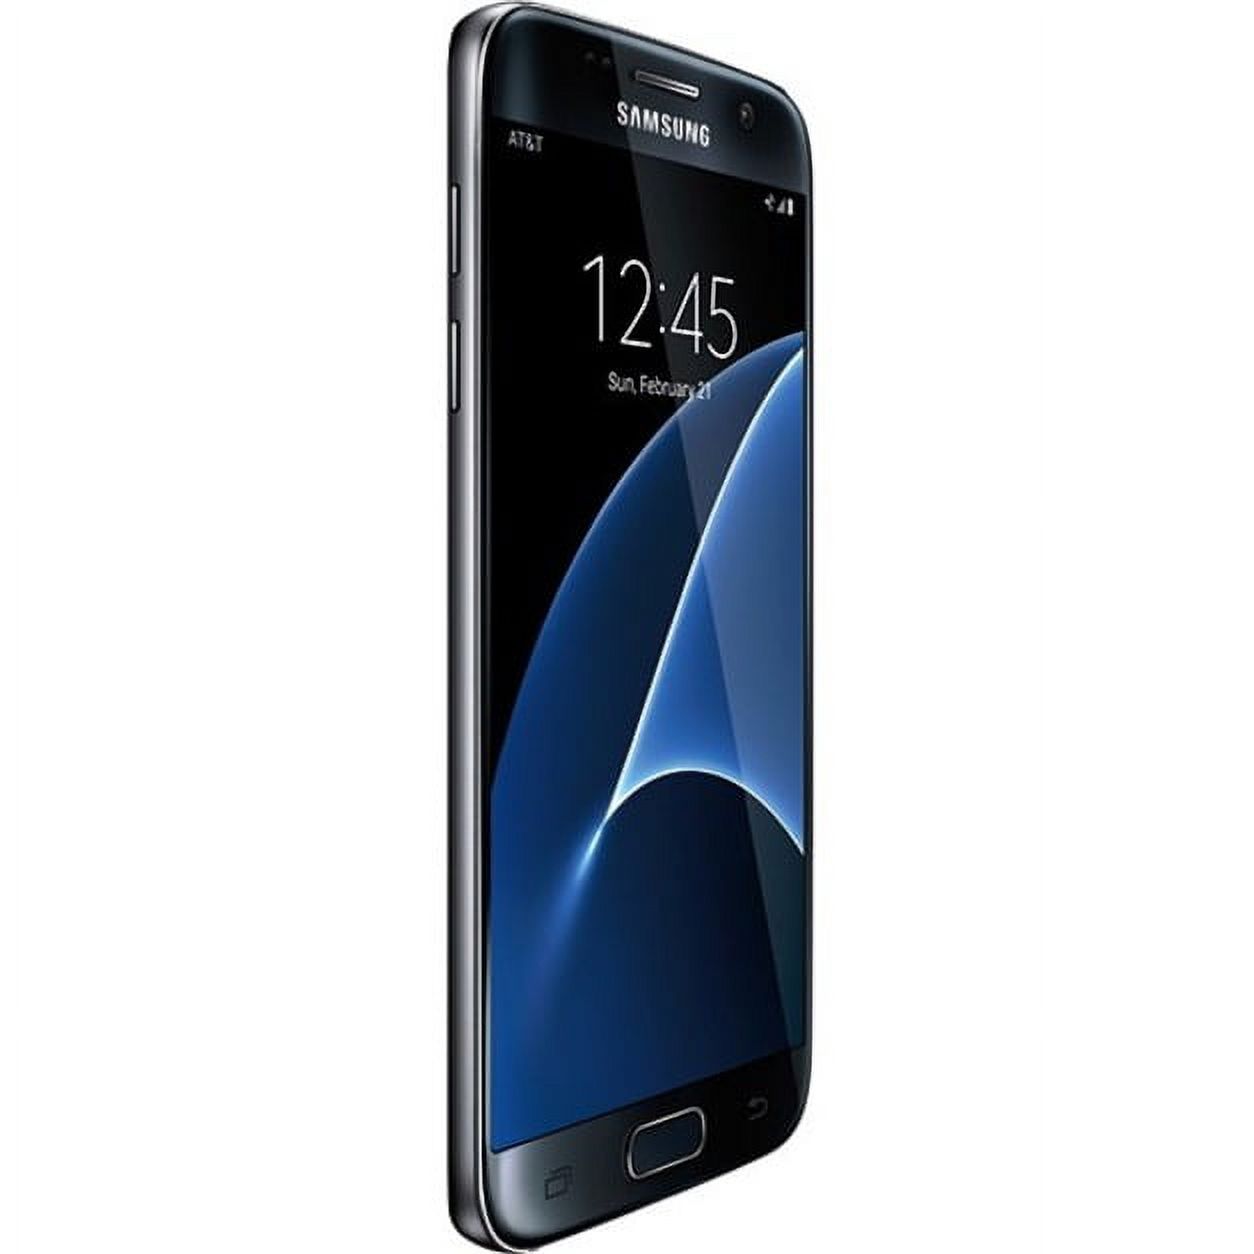 Samsung Galaxy S7 Unlocked 32GB GSM and CDMA Smartphone, Black Onyx - image 4 of 4